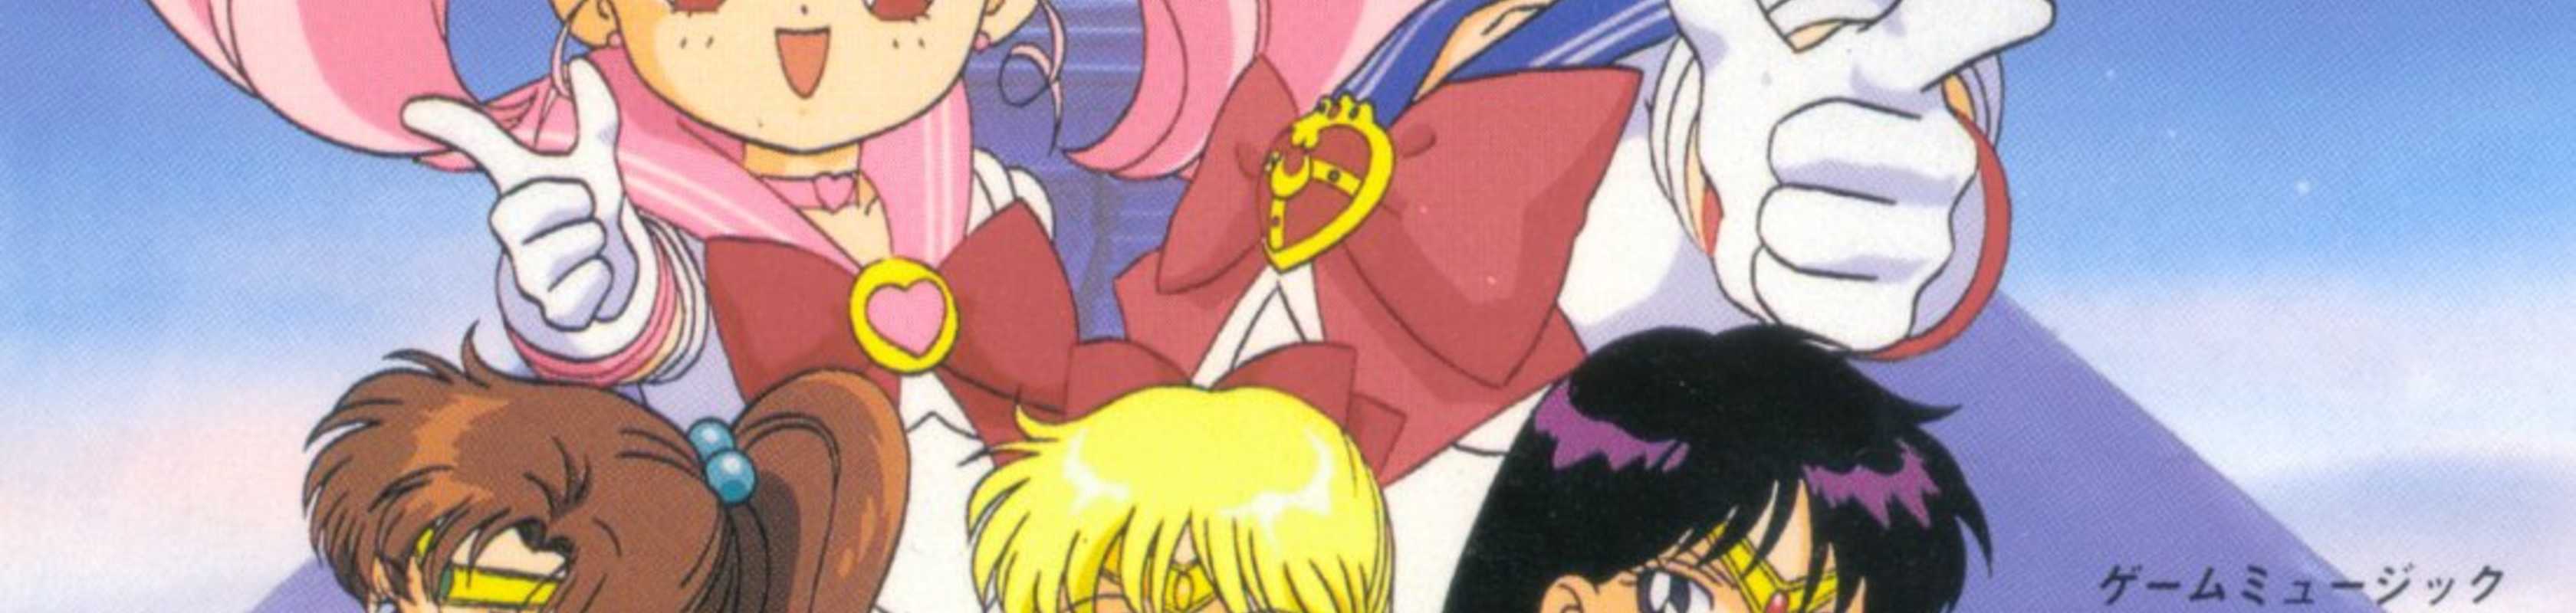 Bishoujo Senshi Sailor Moon S cover